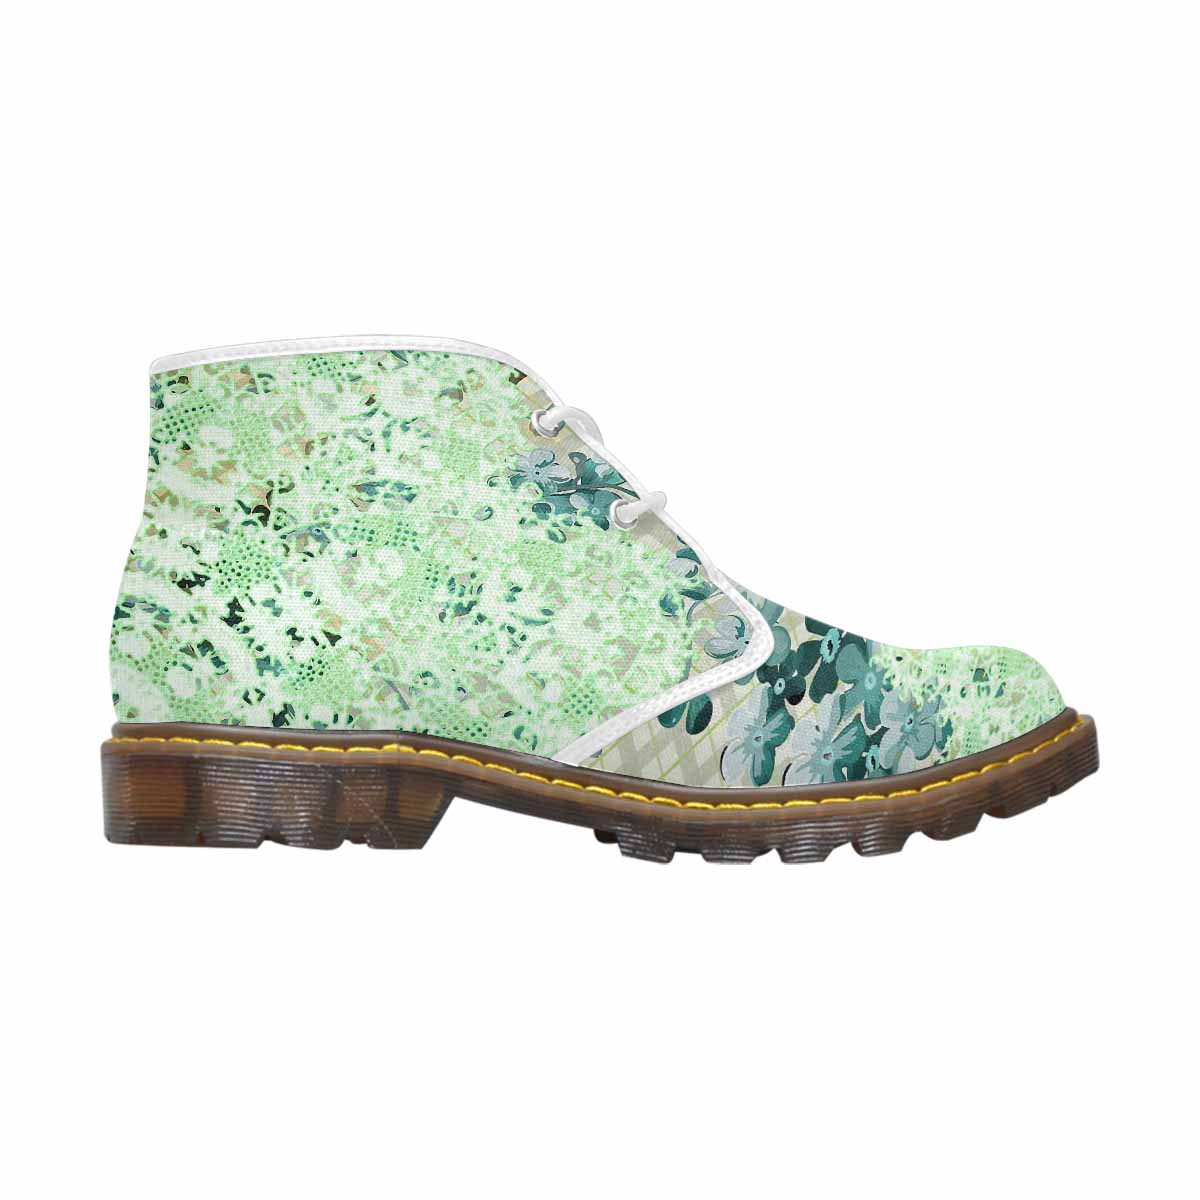 Lace Print, Cute comfy womens Chukka boots, design 53